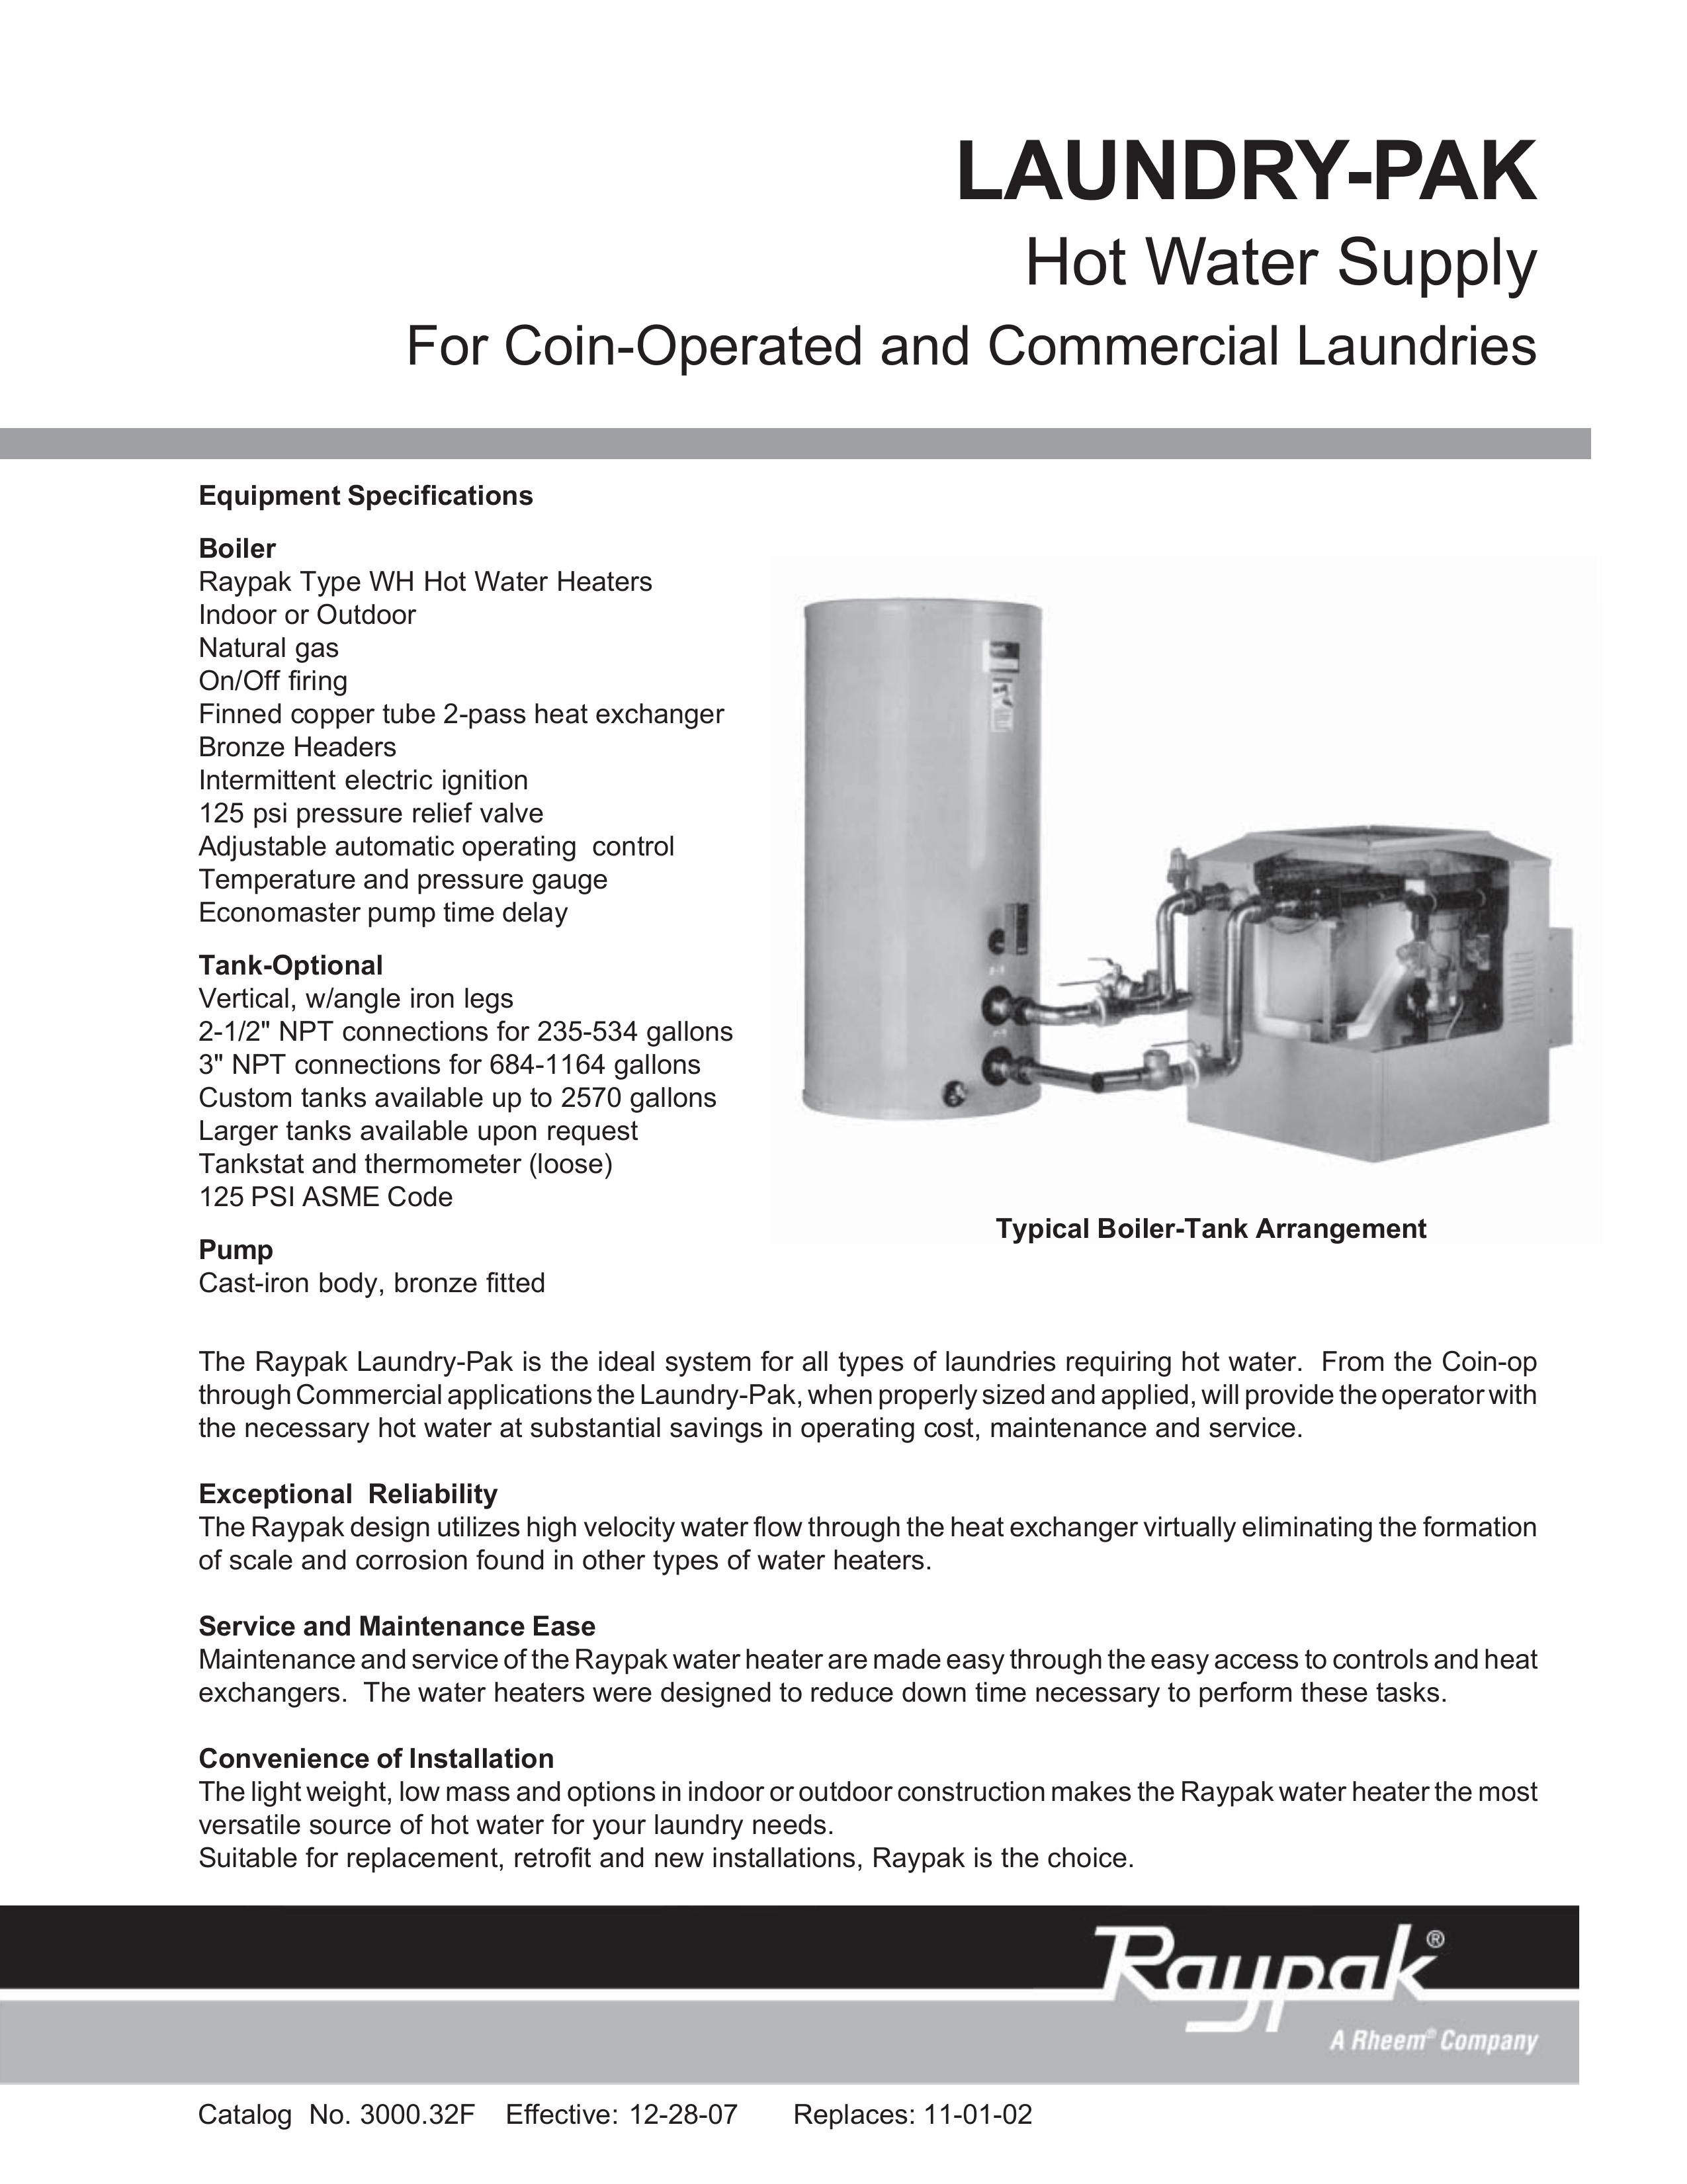 Raypak LAUNDRY-PAK Washer/Dryer User Manual